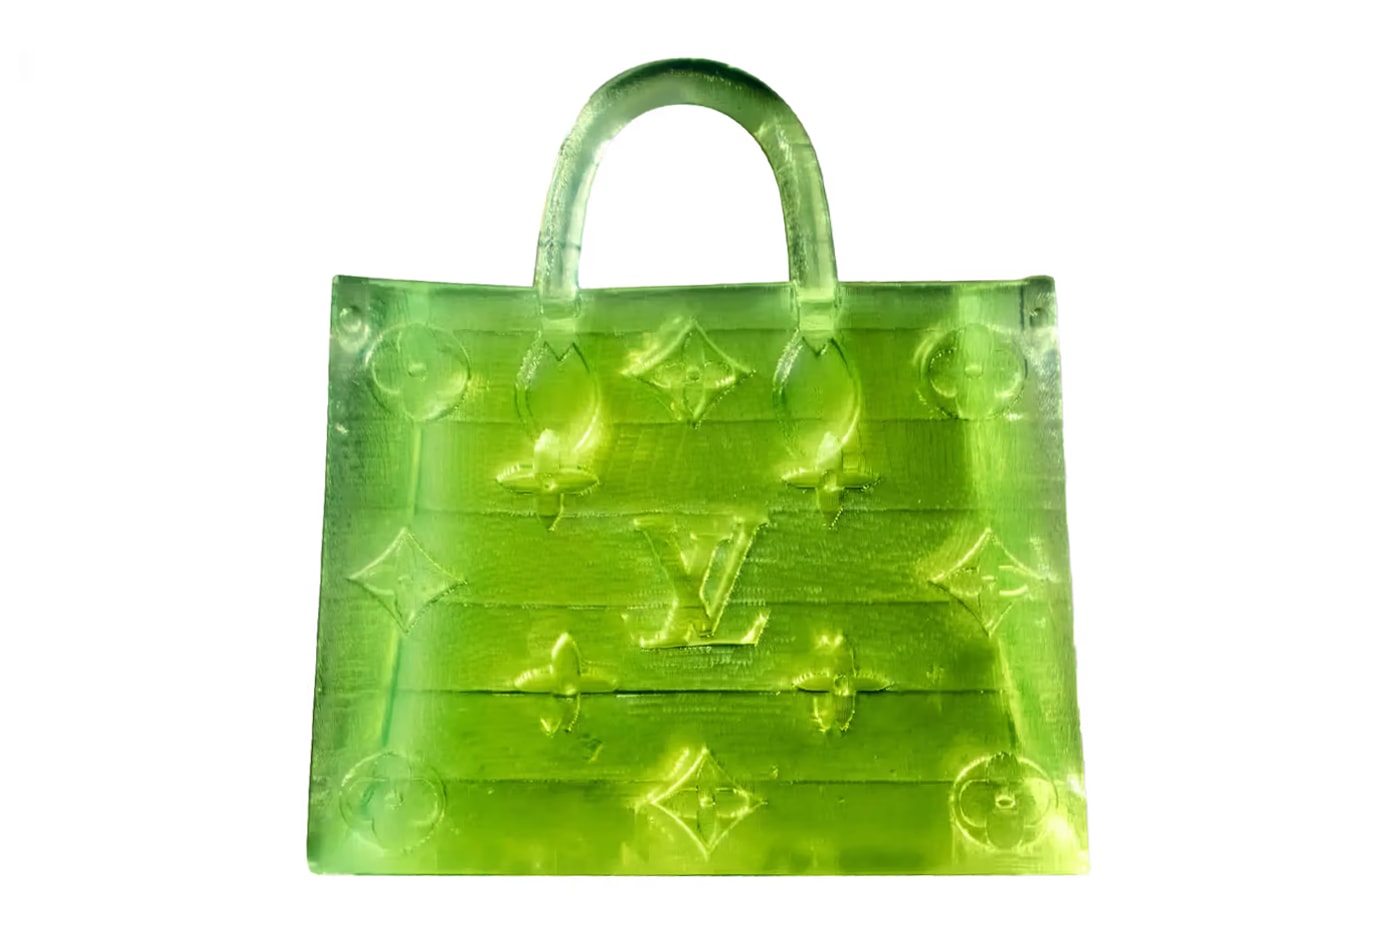 MSCHF의 초소형 핸드백 약 8천3백만 원에 팔렸다, 루이 비통, 퍼렐 윌리엄스, 토트백